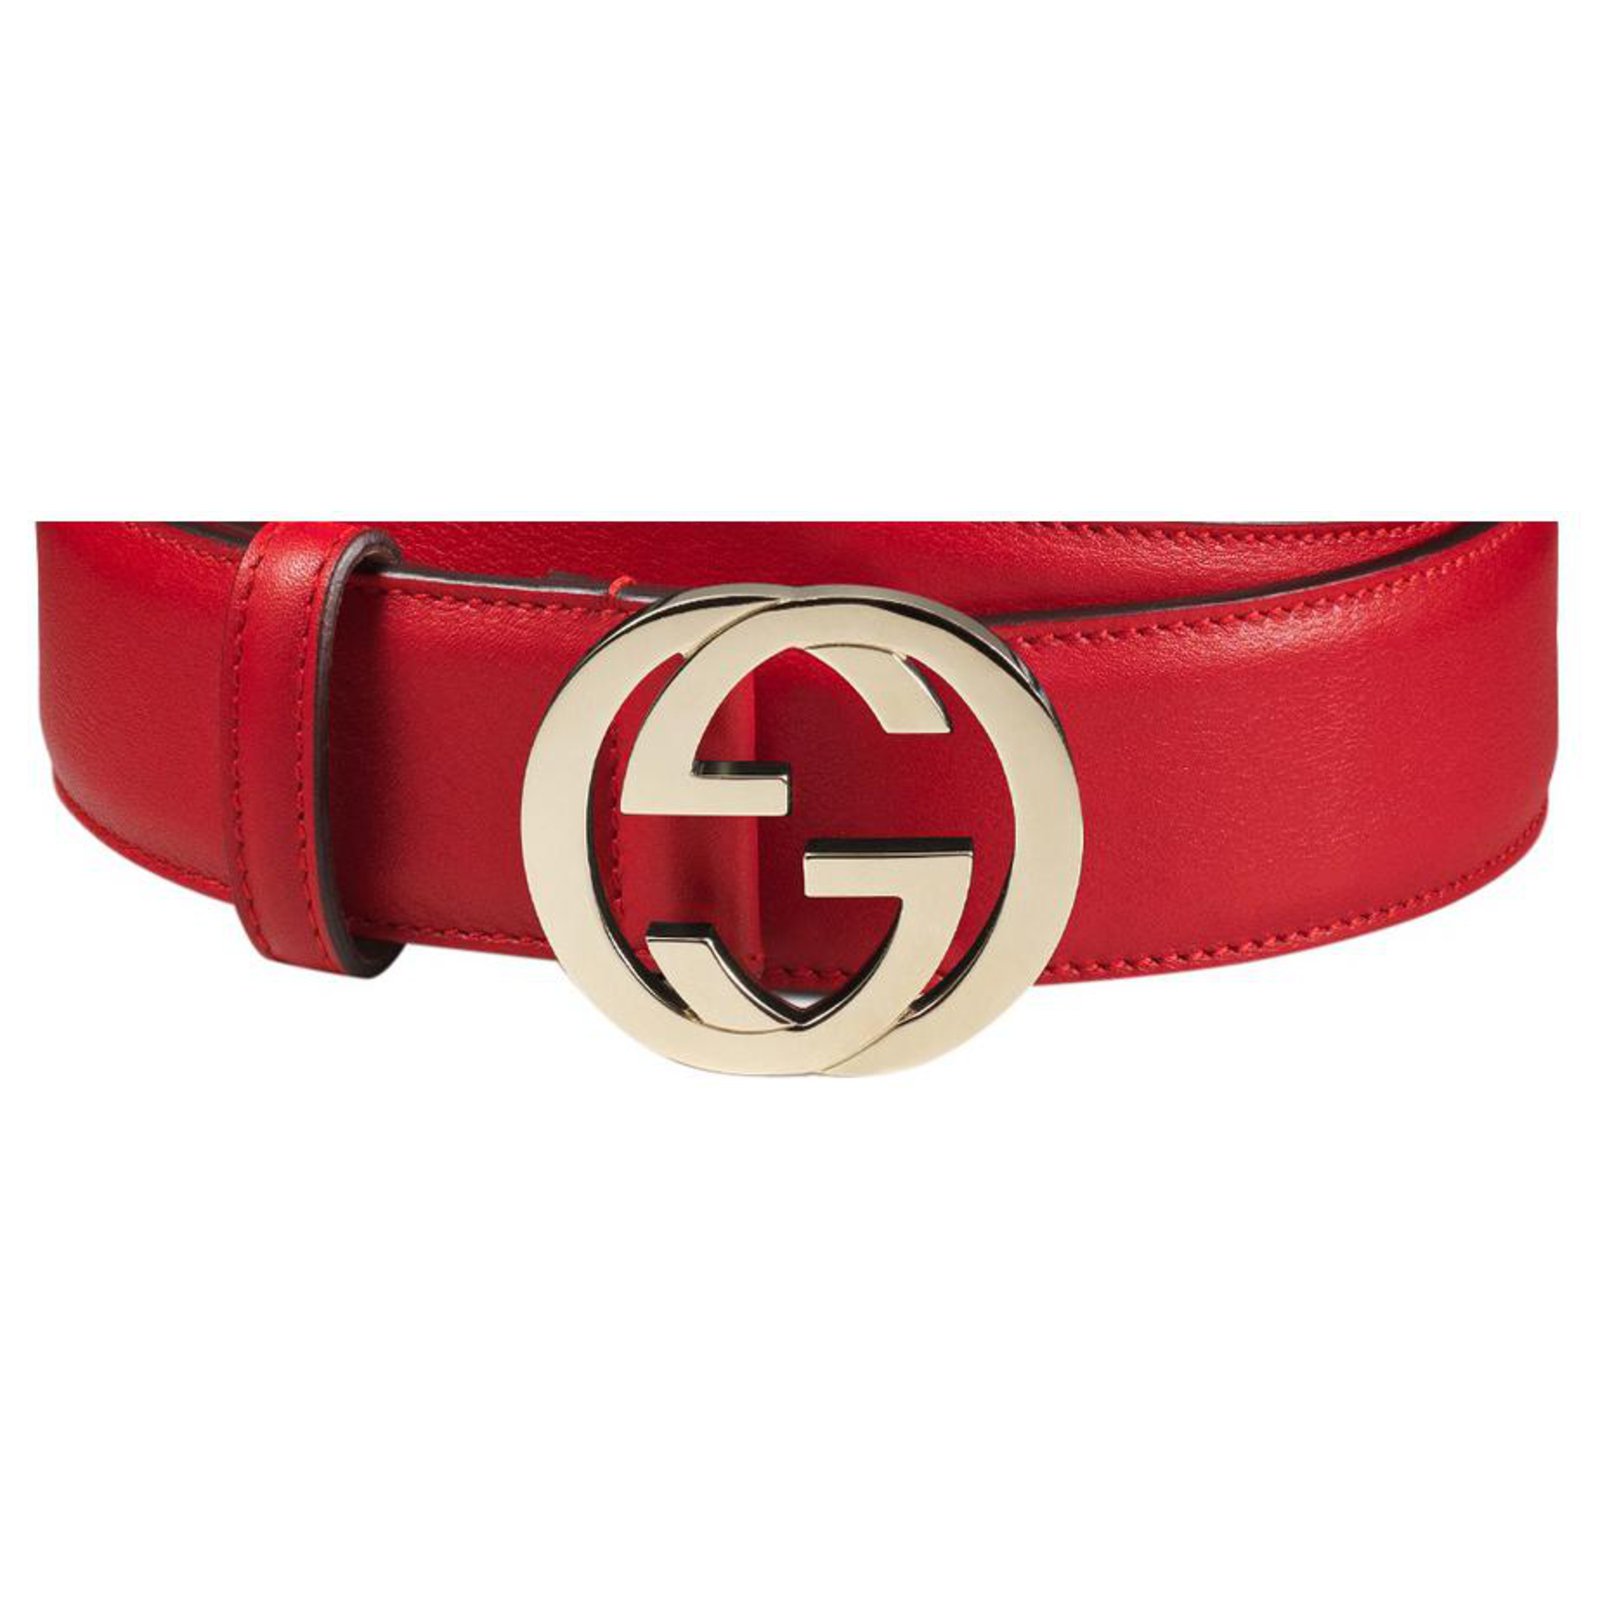 Gucci belt gucci. NEW. Double G. Belts 